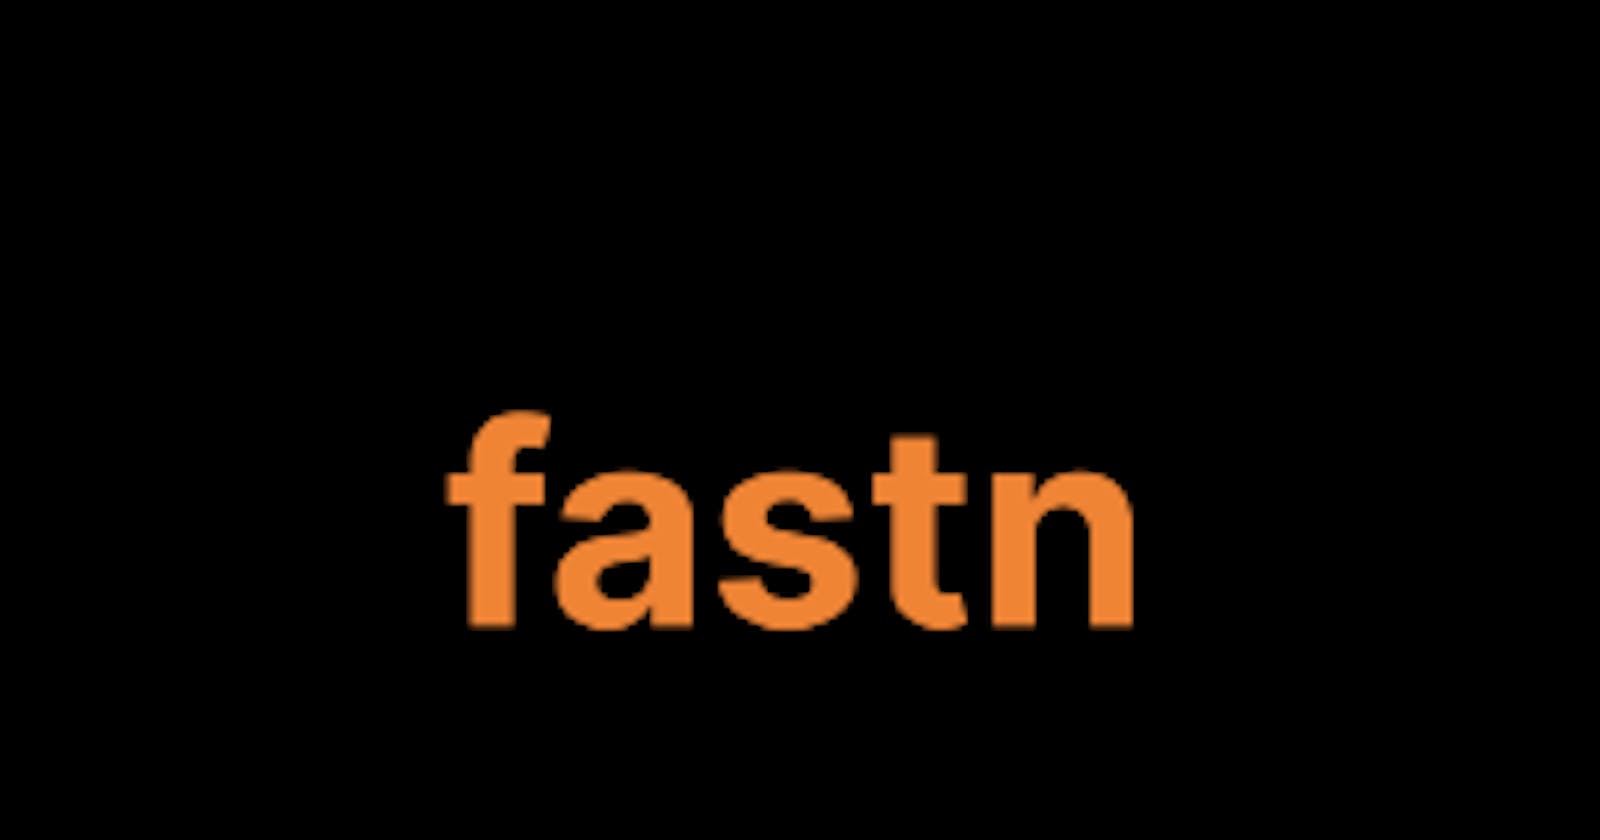 Exploring FastN: Building My Navigative Landing Page